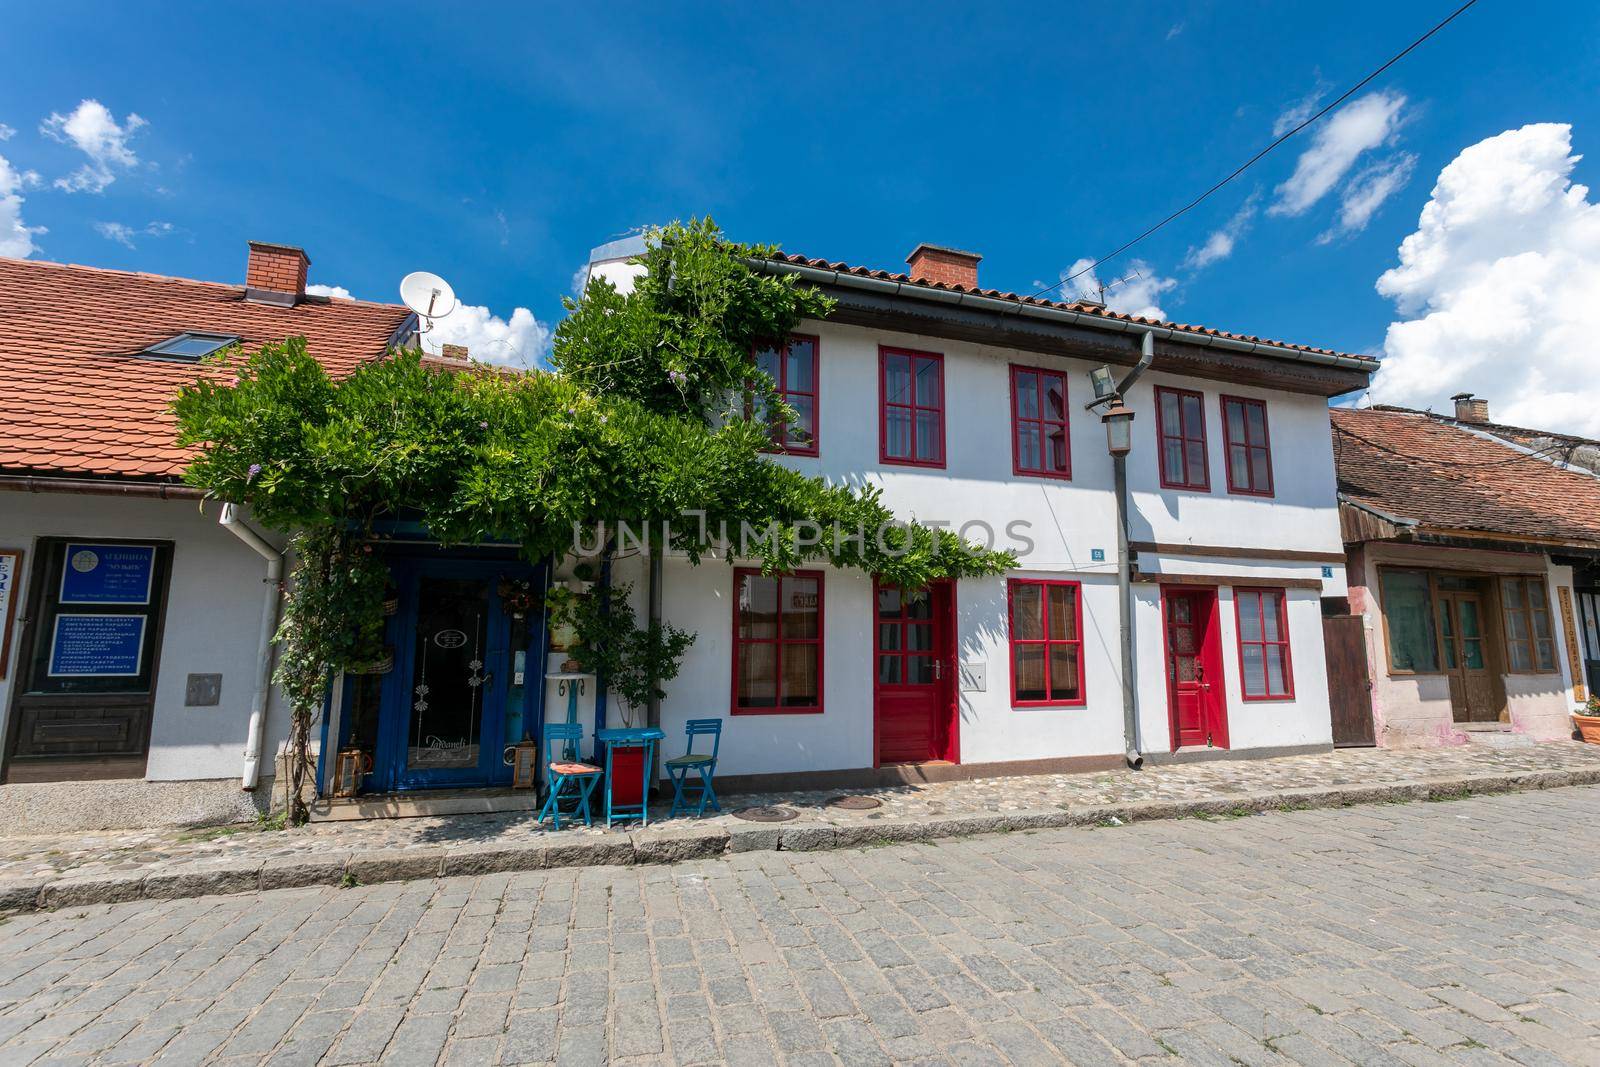 Valjevo - the old town Tesnjar by adamr